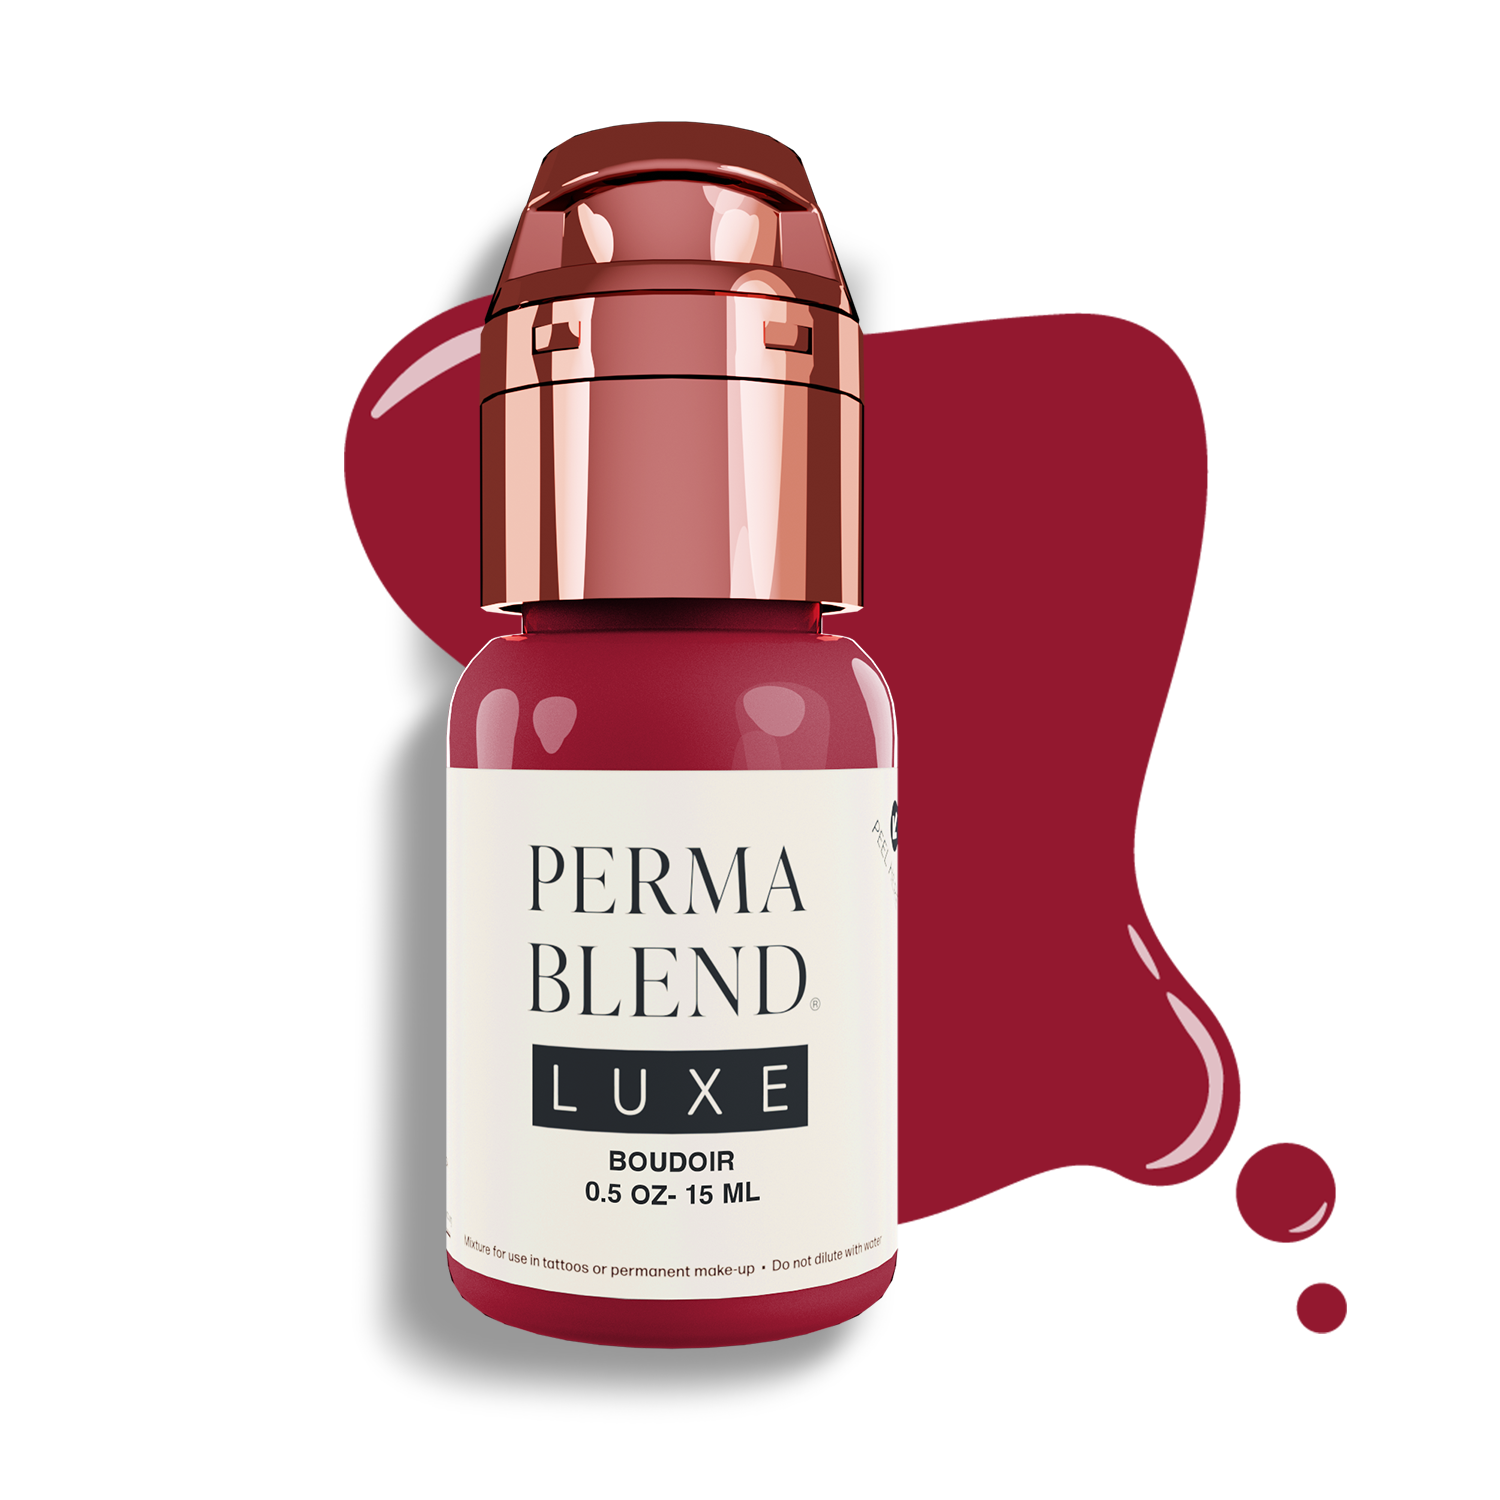 Perma Blend Luxe PMU Ink | Boudoir | Lips